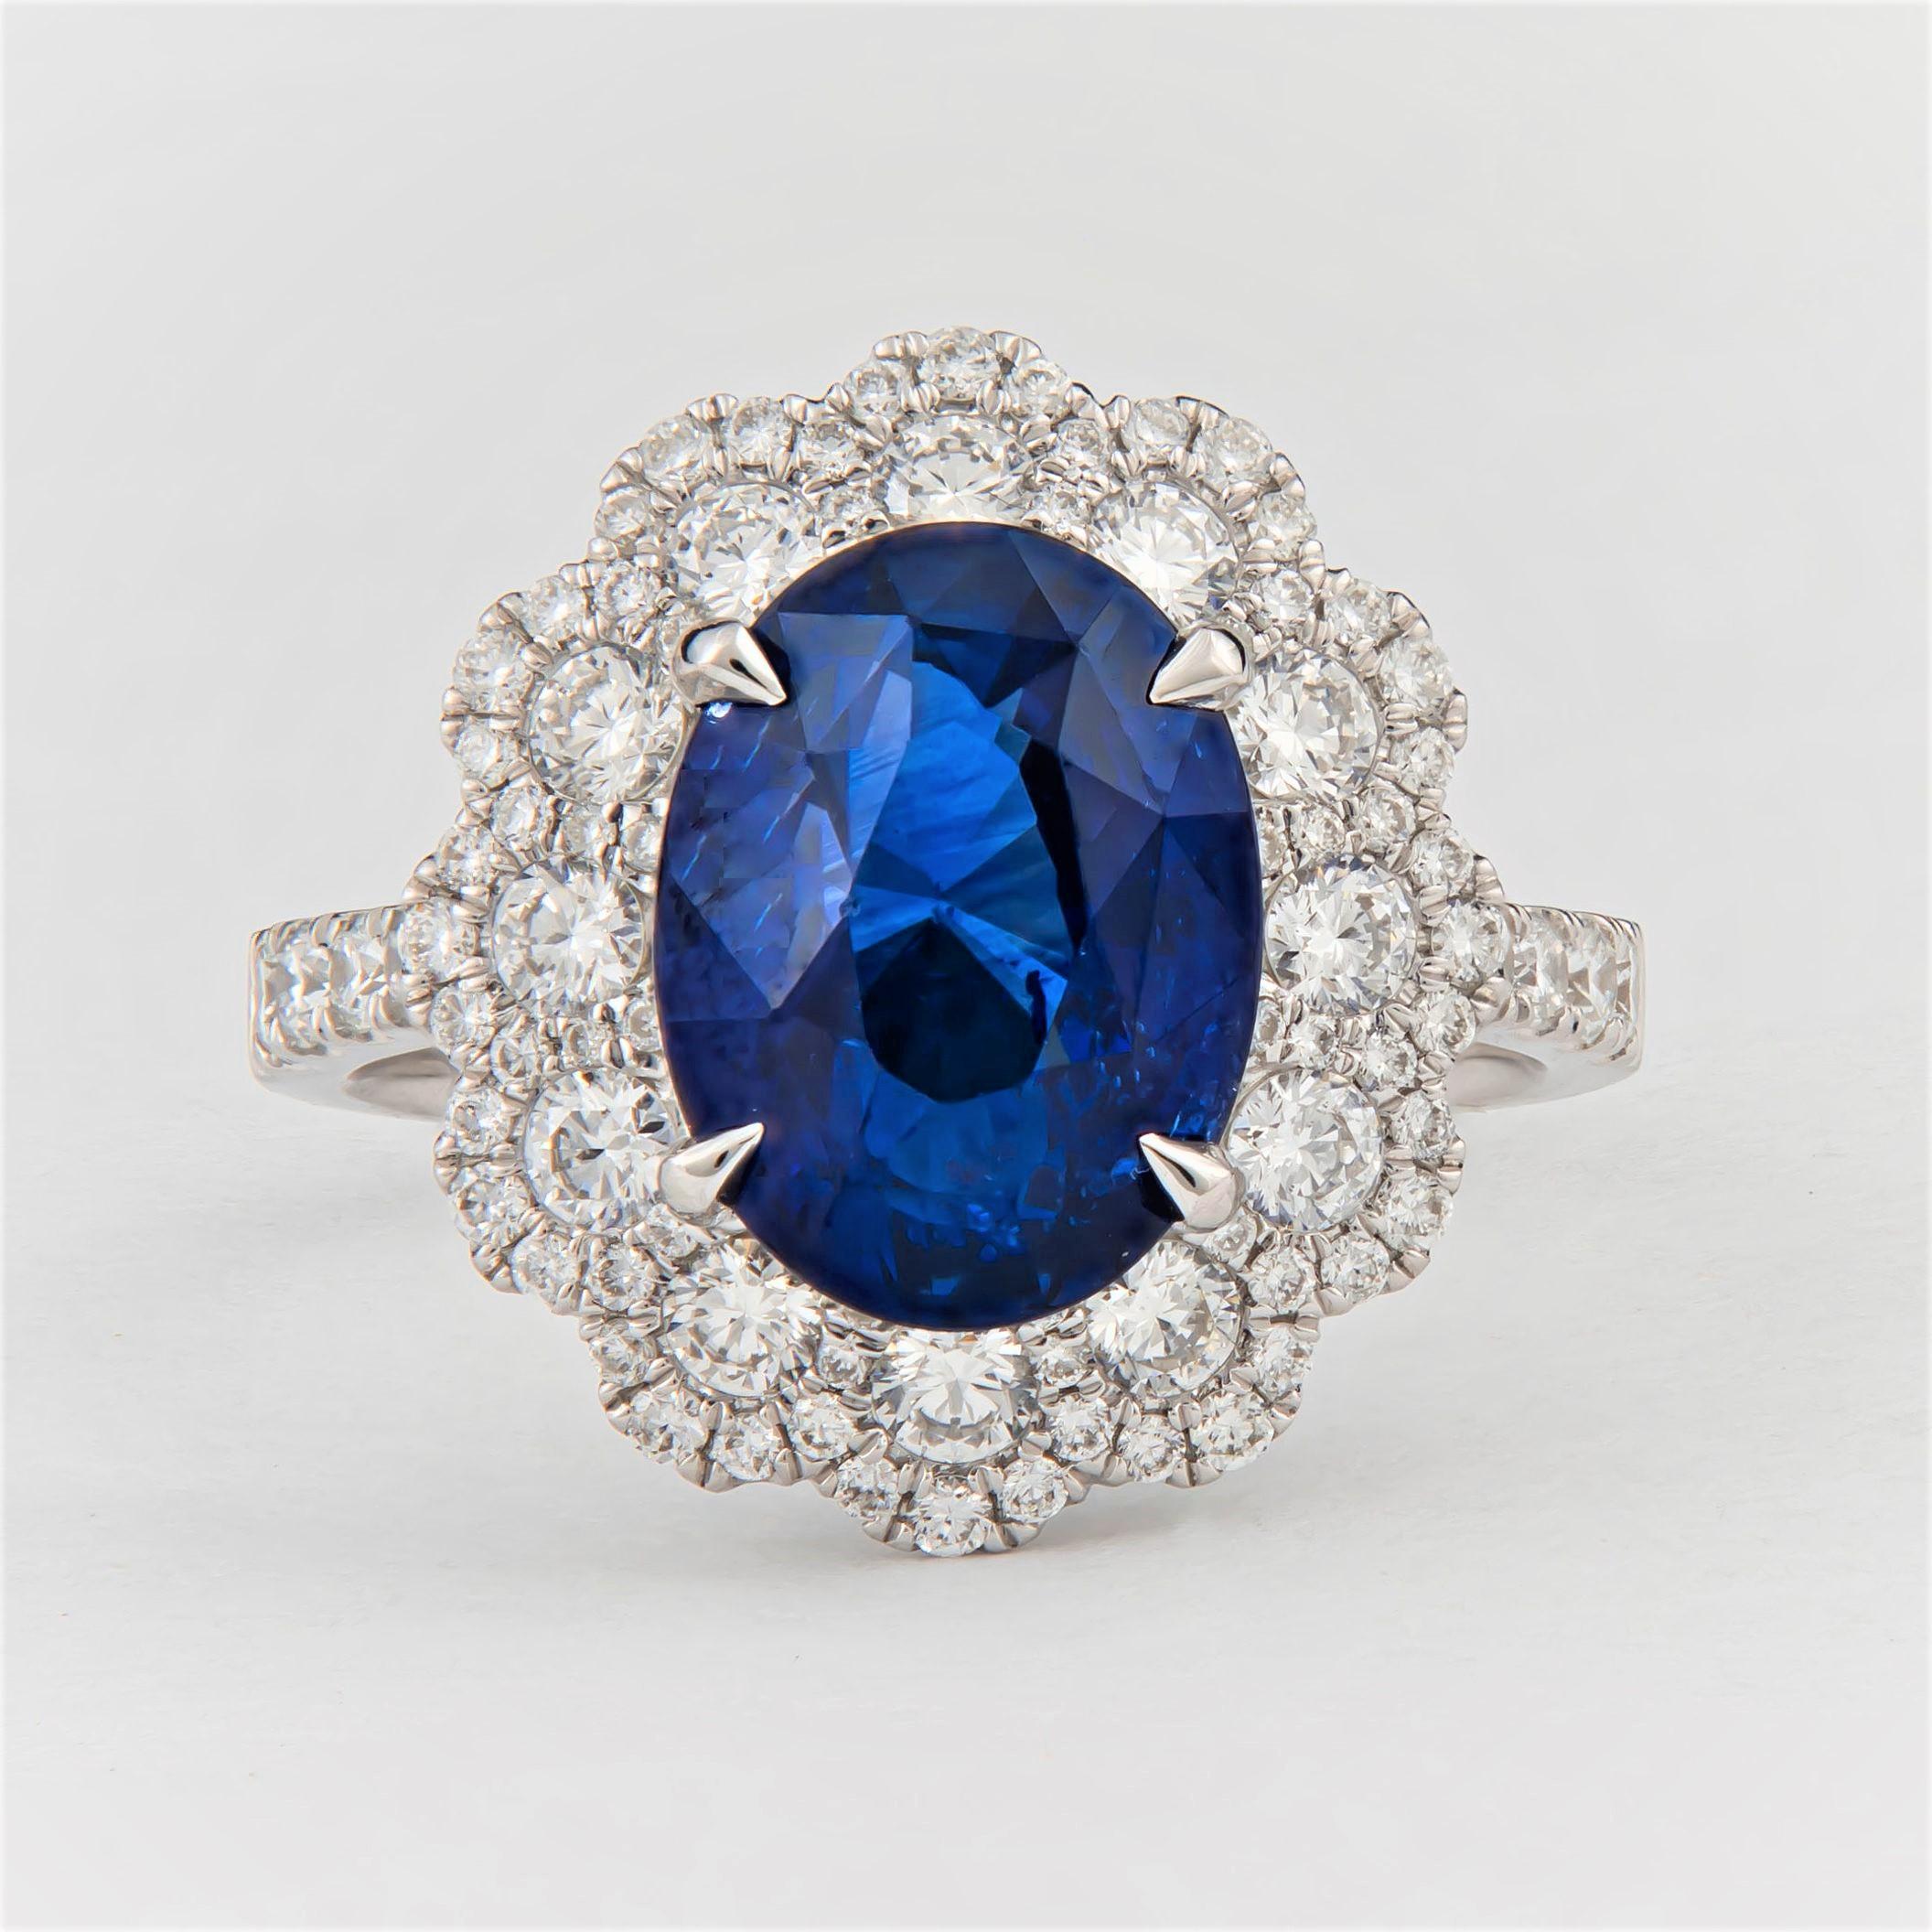 Women's 5.09 Carat Natural Oval Blue Sapphire 'GIA' Flower Style Diamond Ring, 18 Karat